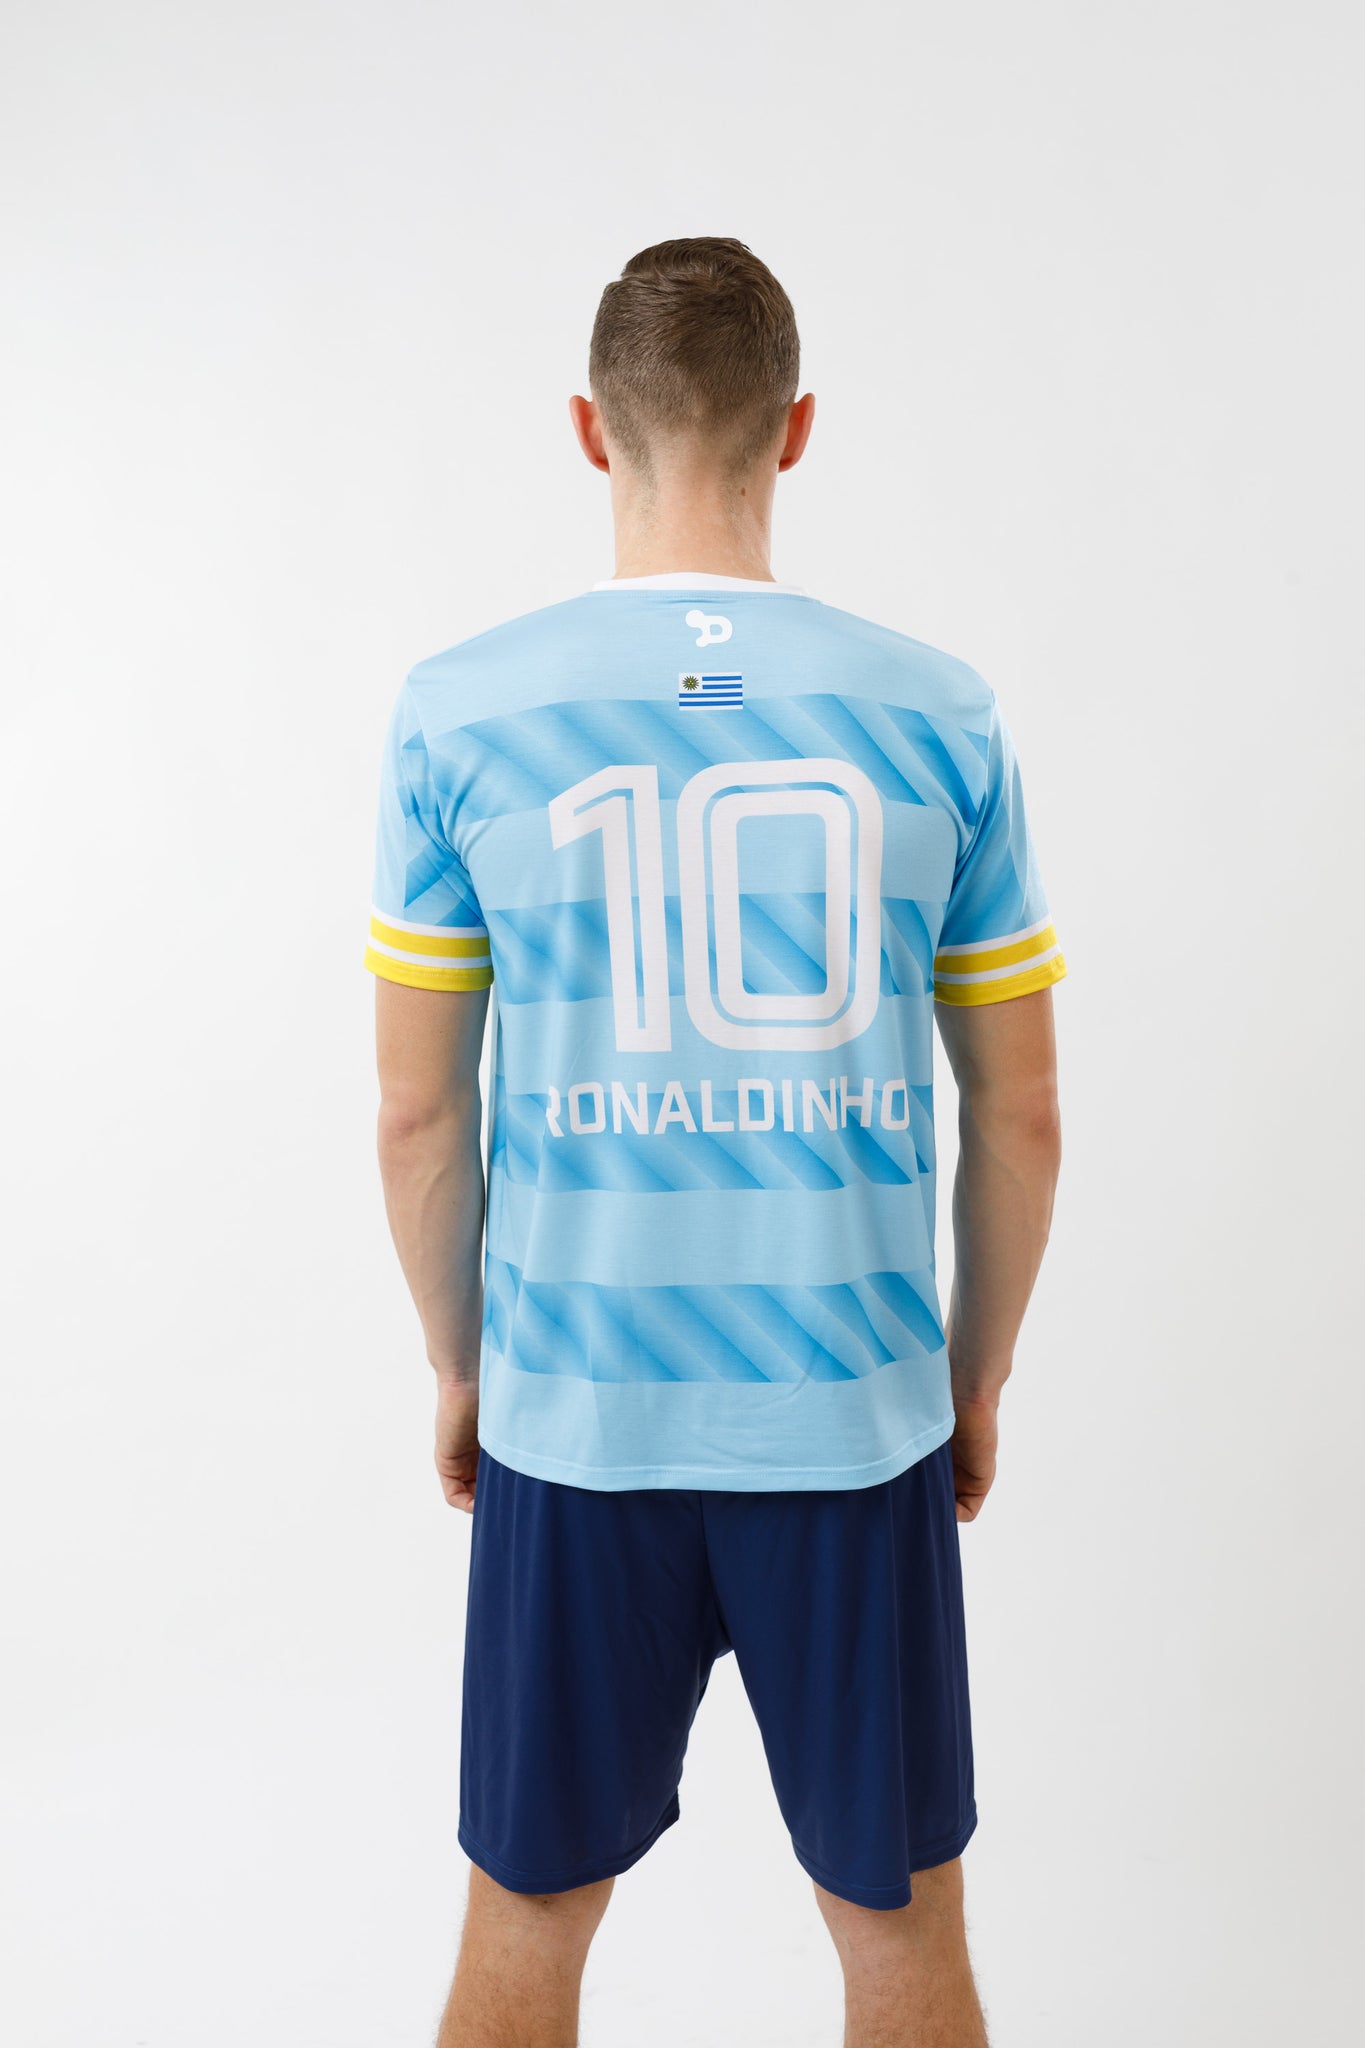 Ronaldinho Uruguay Jersey/Camisa